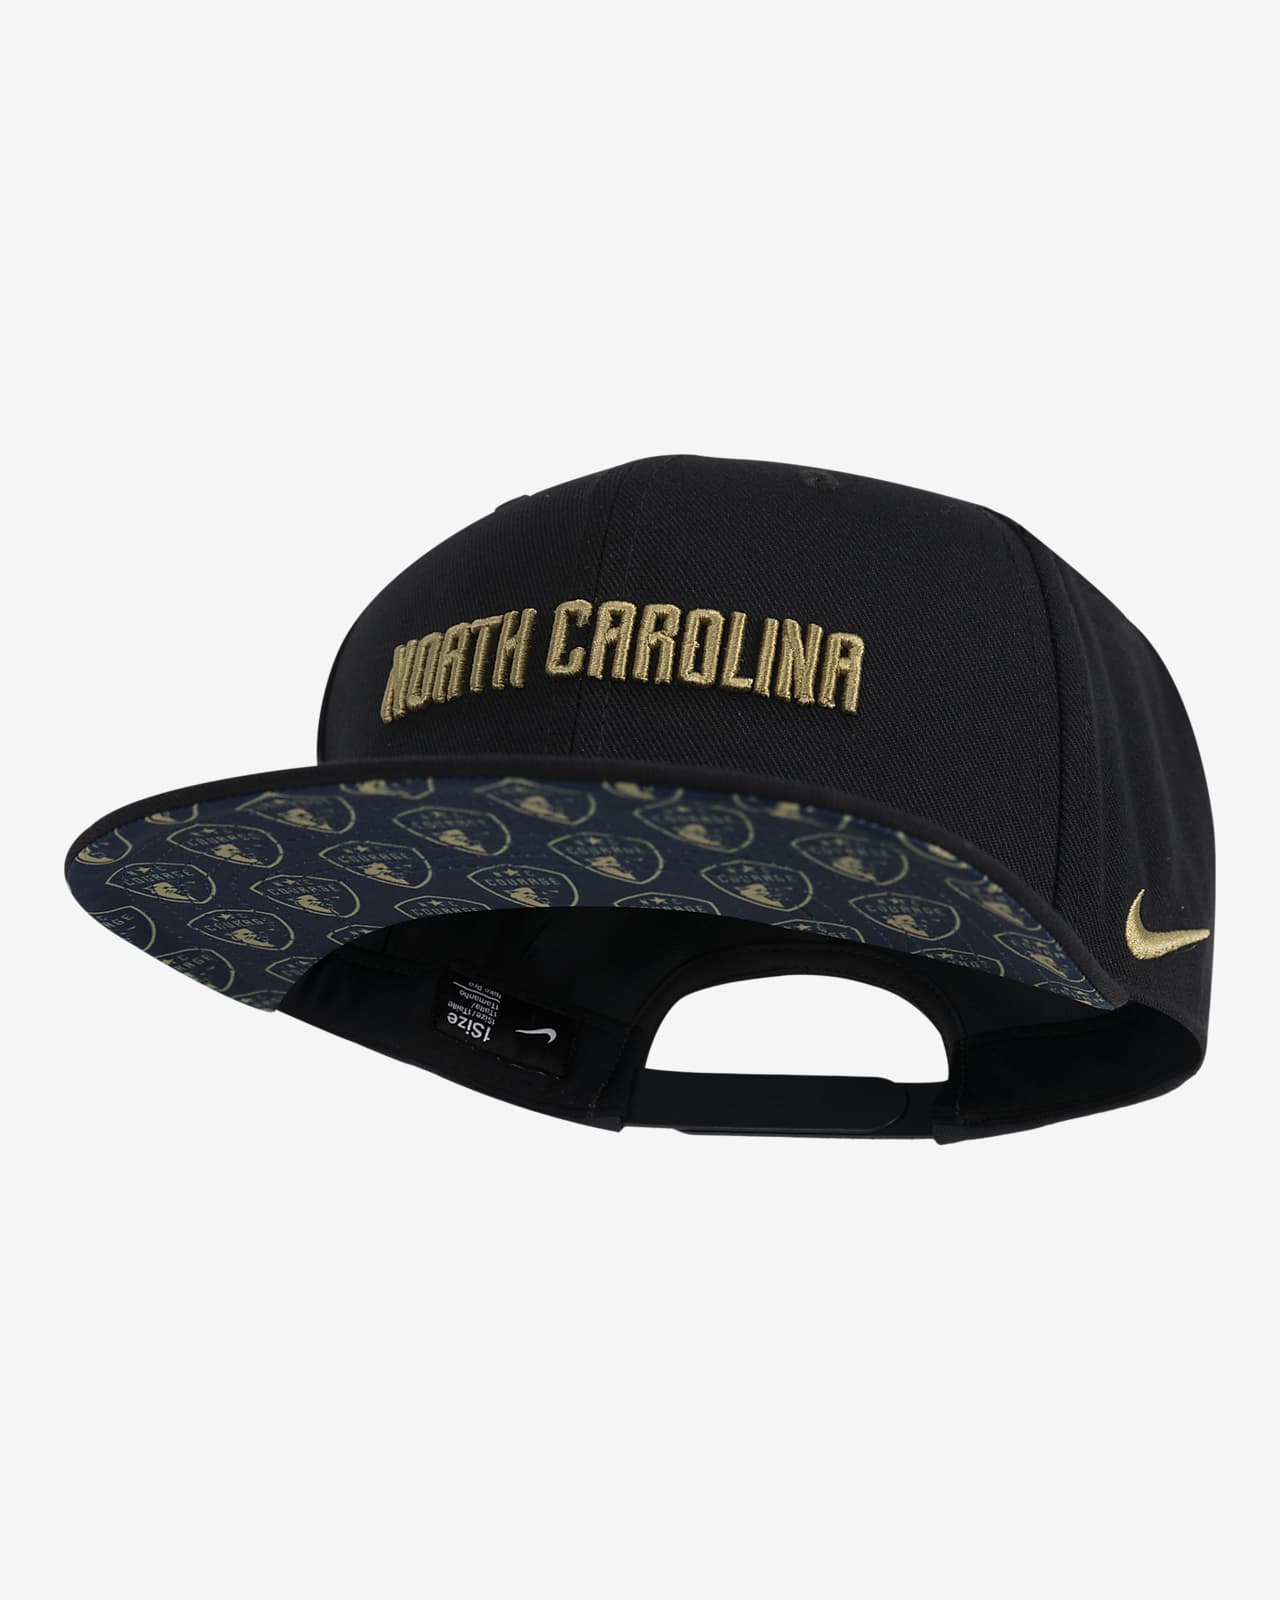 North Carolina Courage Nike Soccer Hat